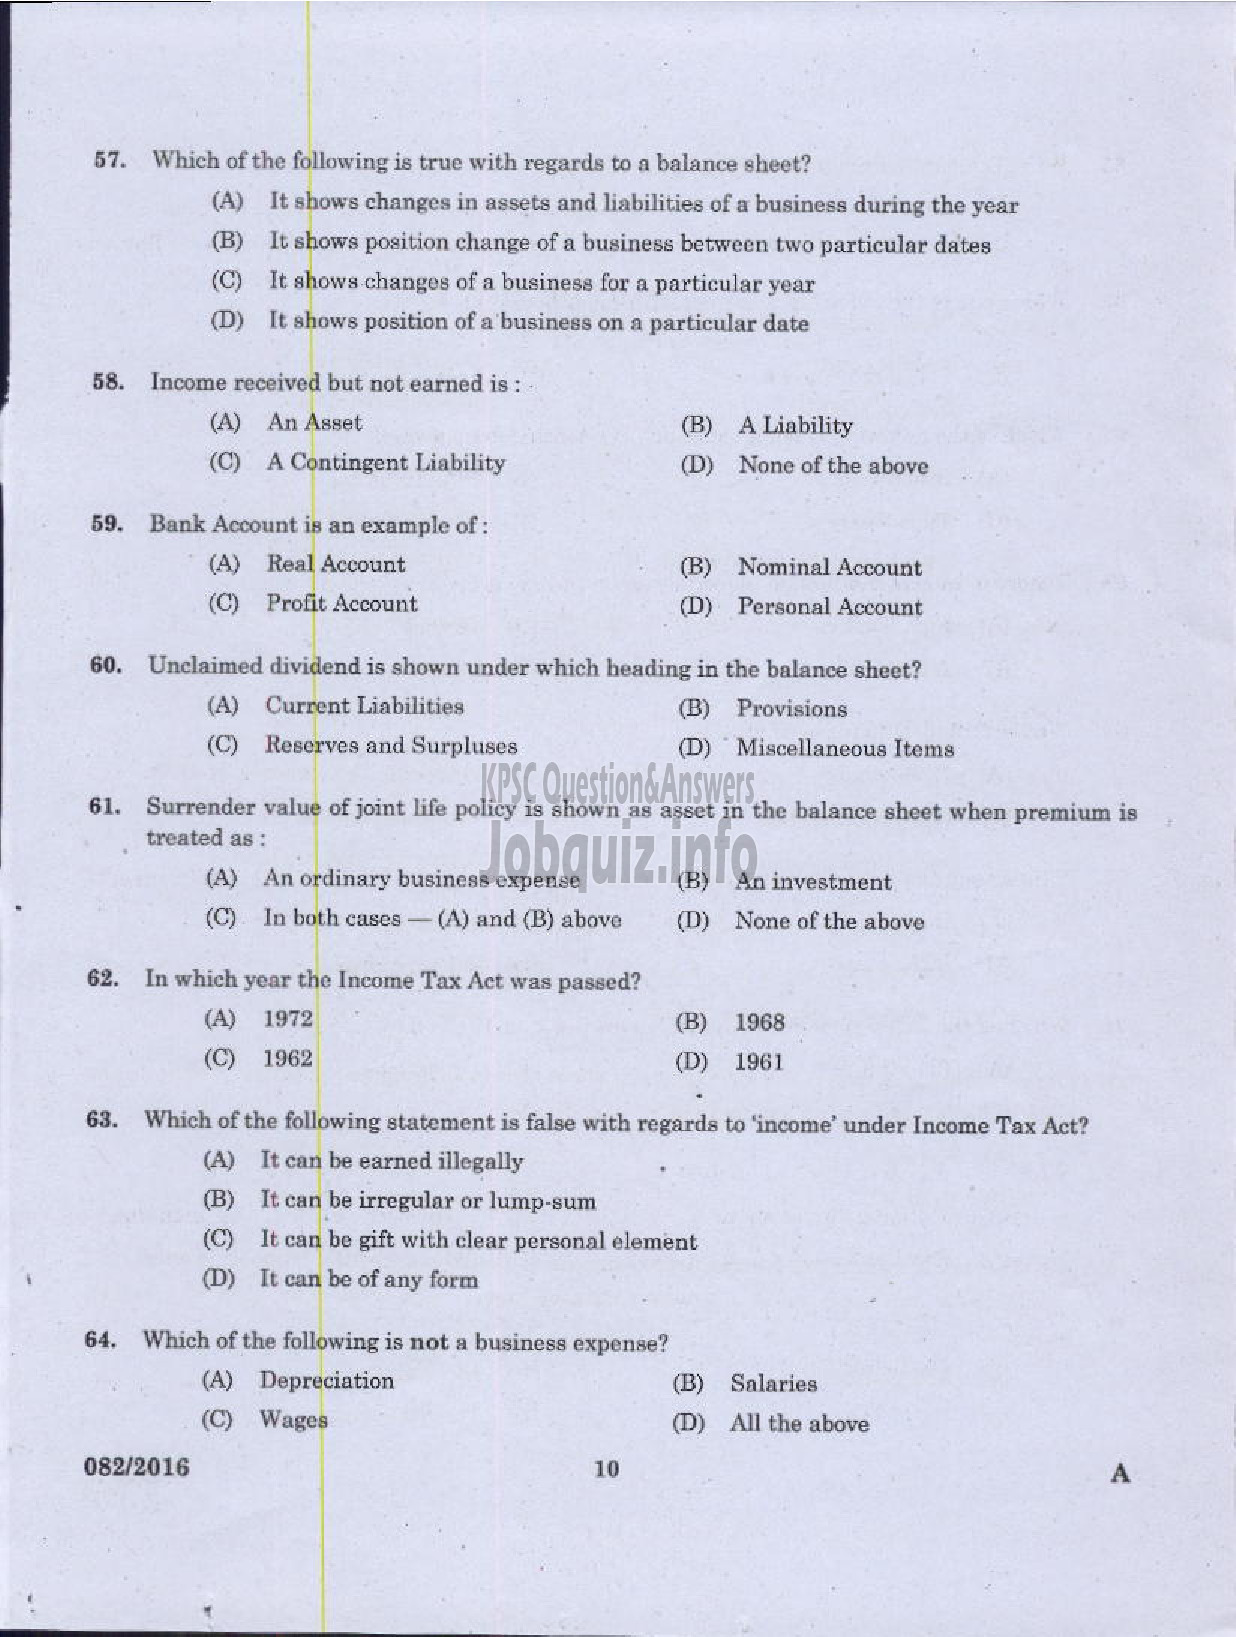 Kerala PSC Question Paper - ACCOUNTANT /JUNIOR ACCOUNTANT /ACCOUNTS ASSISTANT VARIOUS COMPANIES/CORPNS/BOARDS/SOCIETIES-8